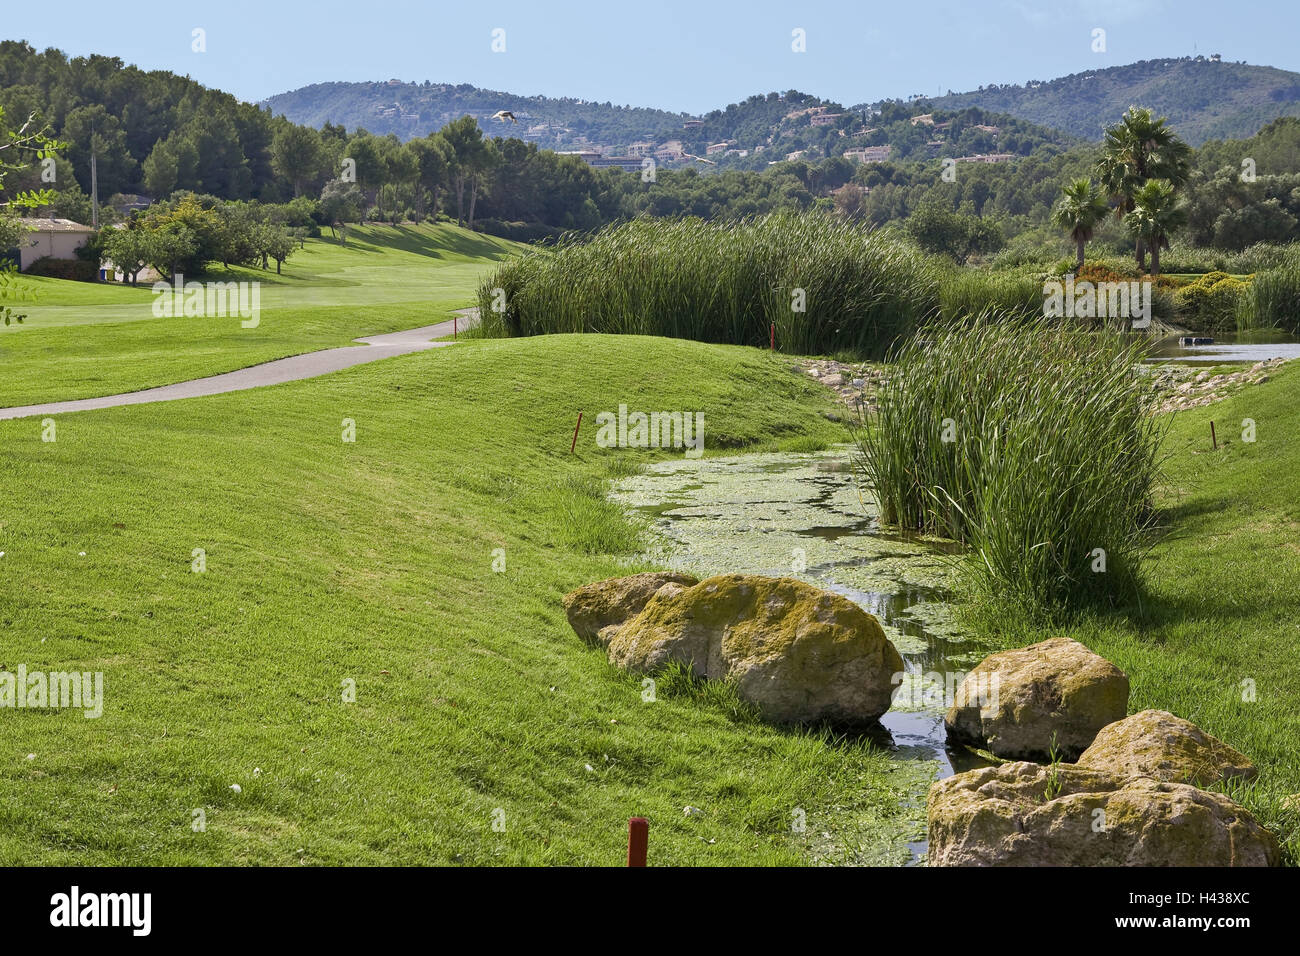 Spain, the Balearic Islands, island Majorca, Son Muntaner, golf course, Stock Photo